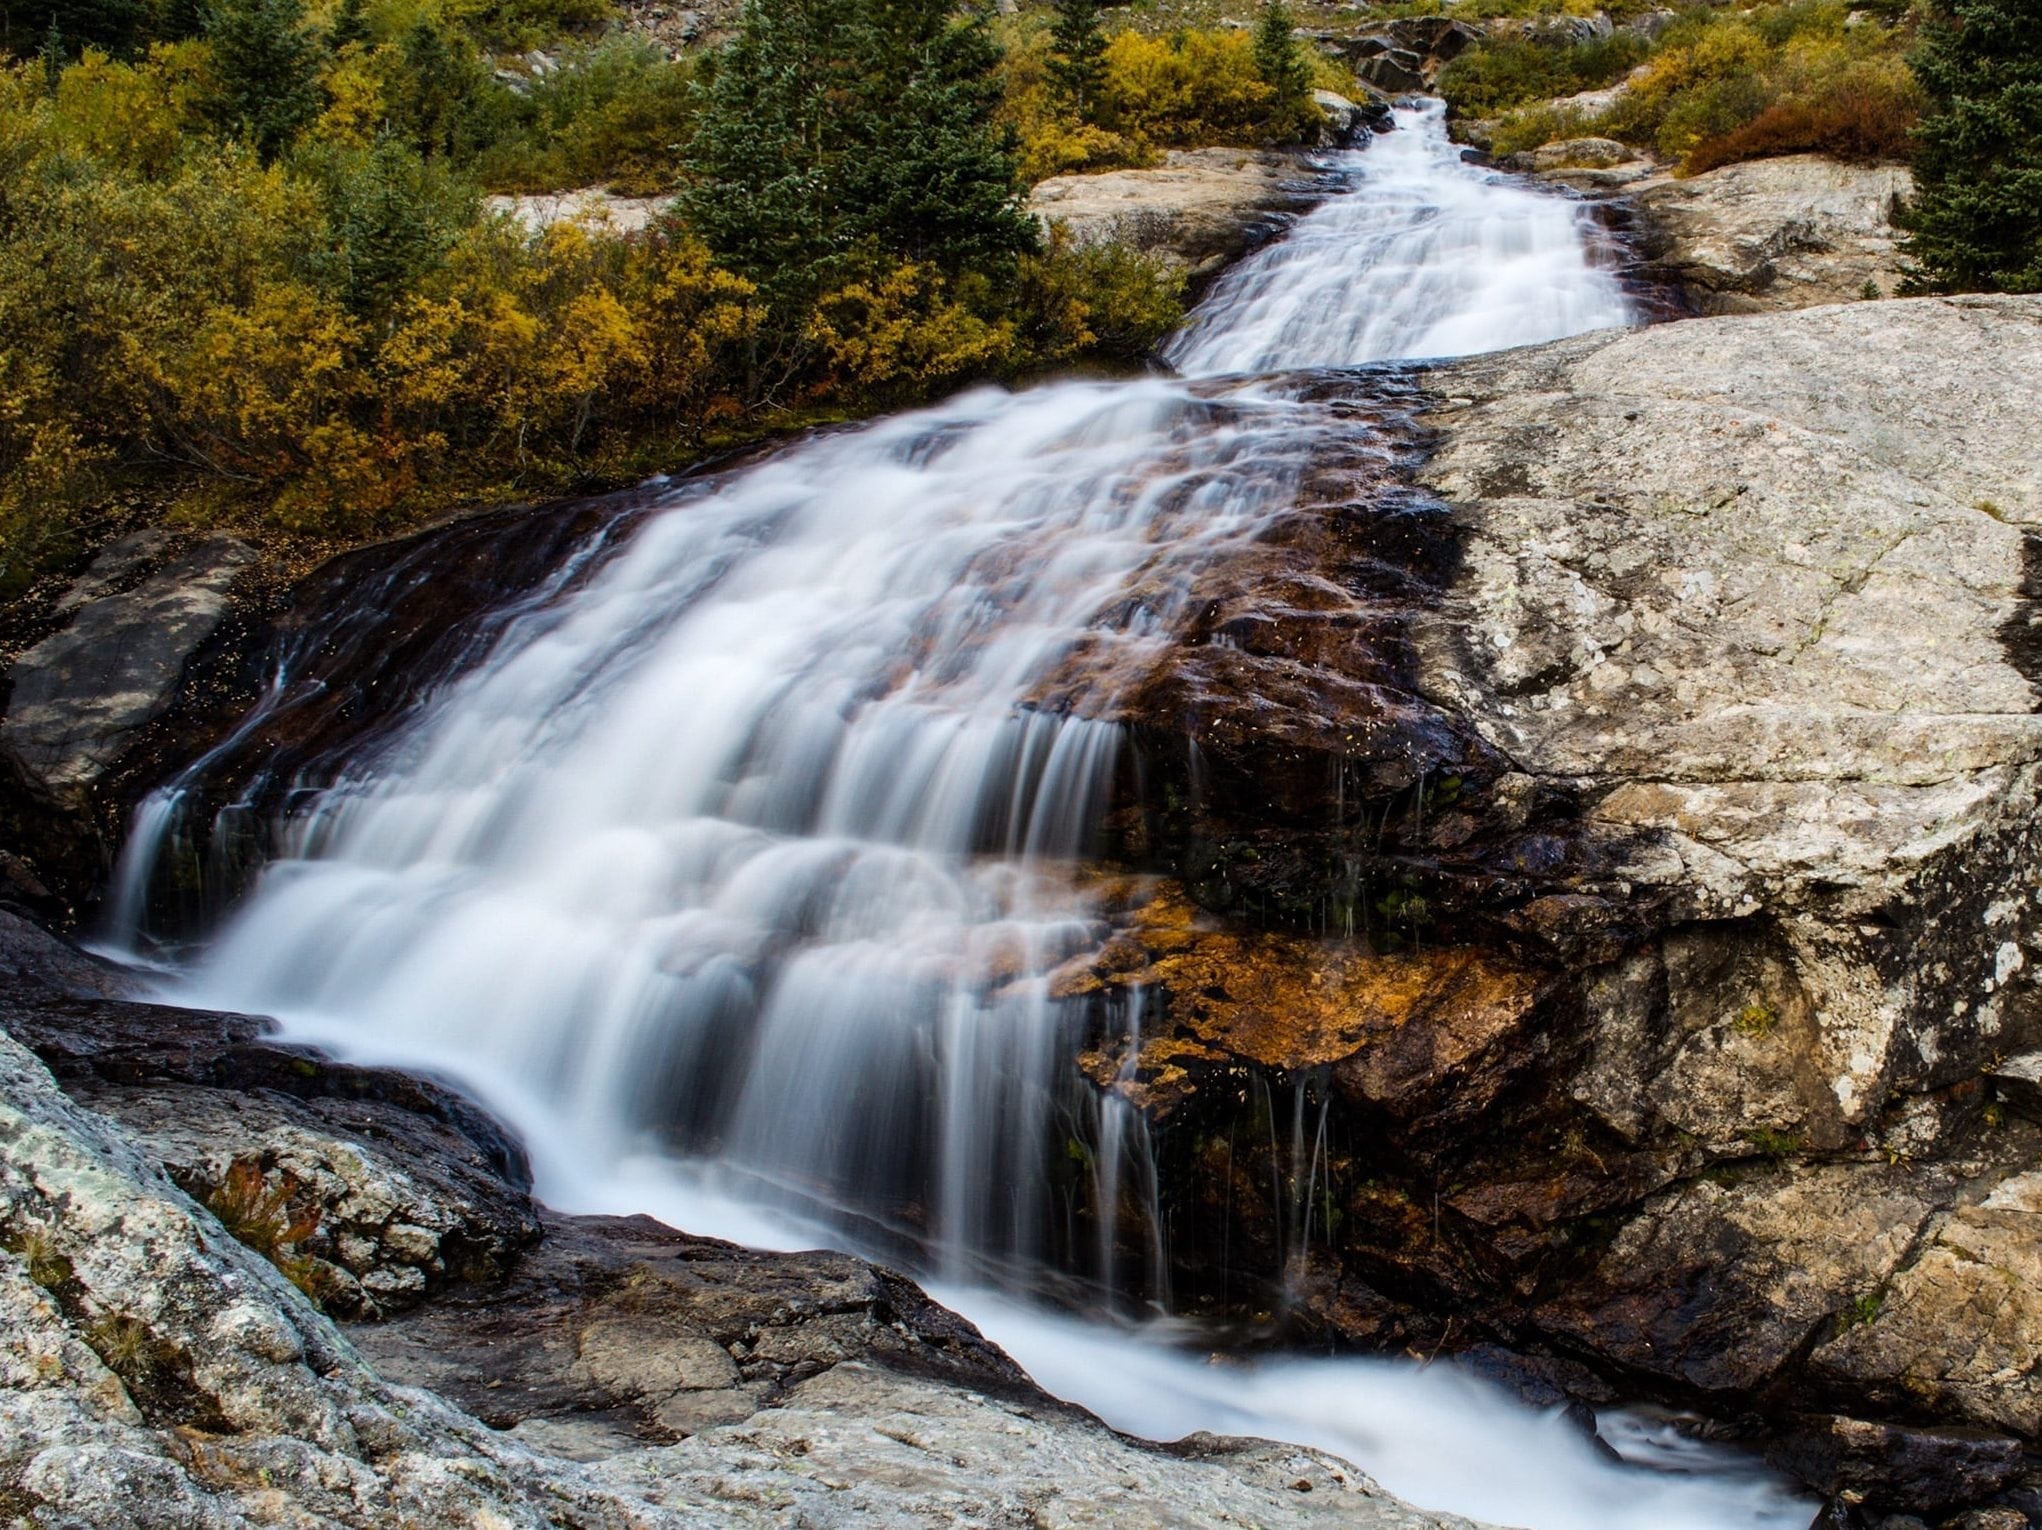 One of the many Breckenridge waterfalls found in Monte Cristo Gulch.